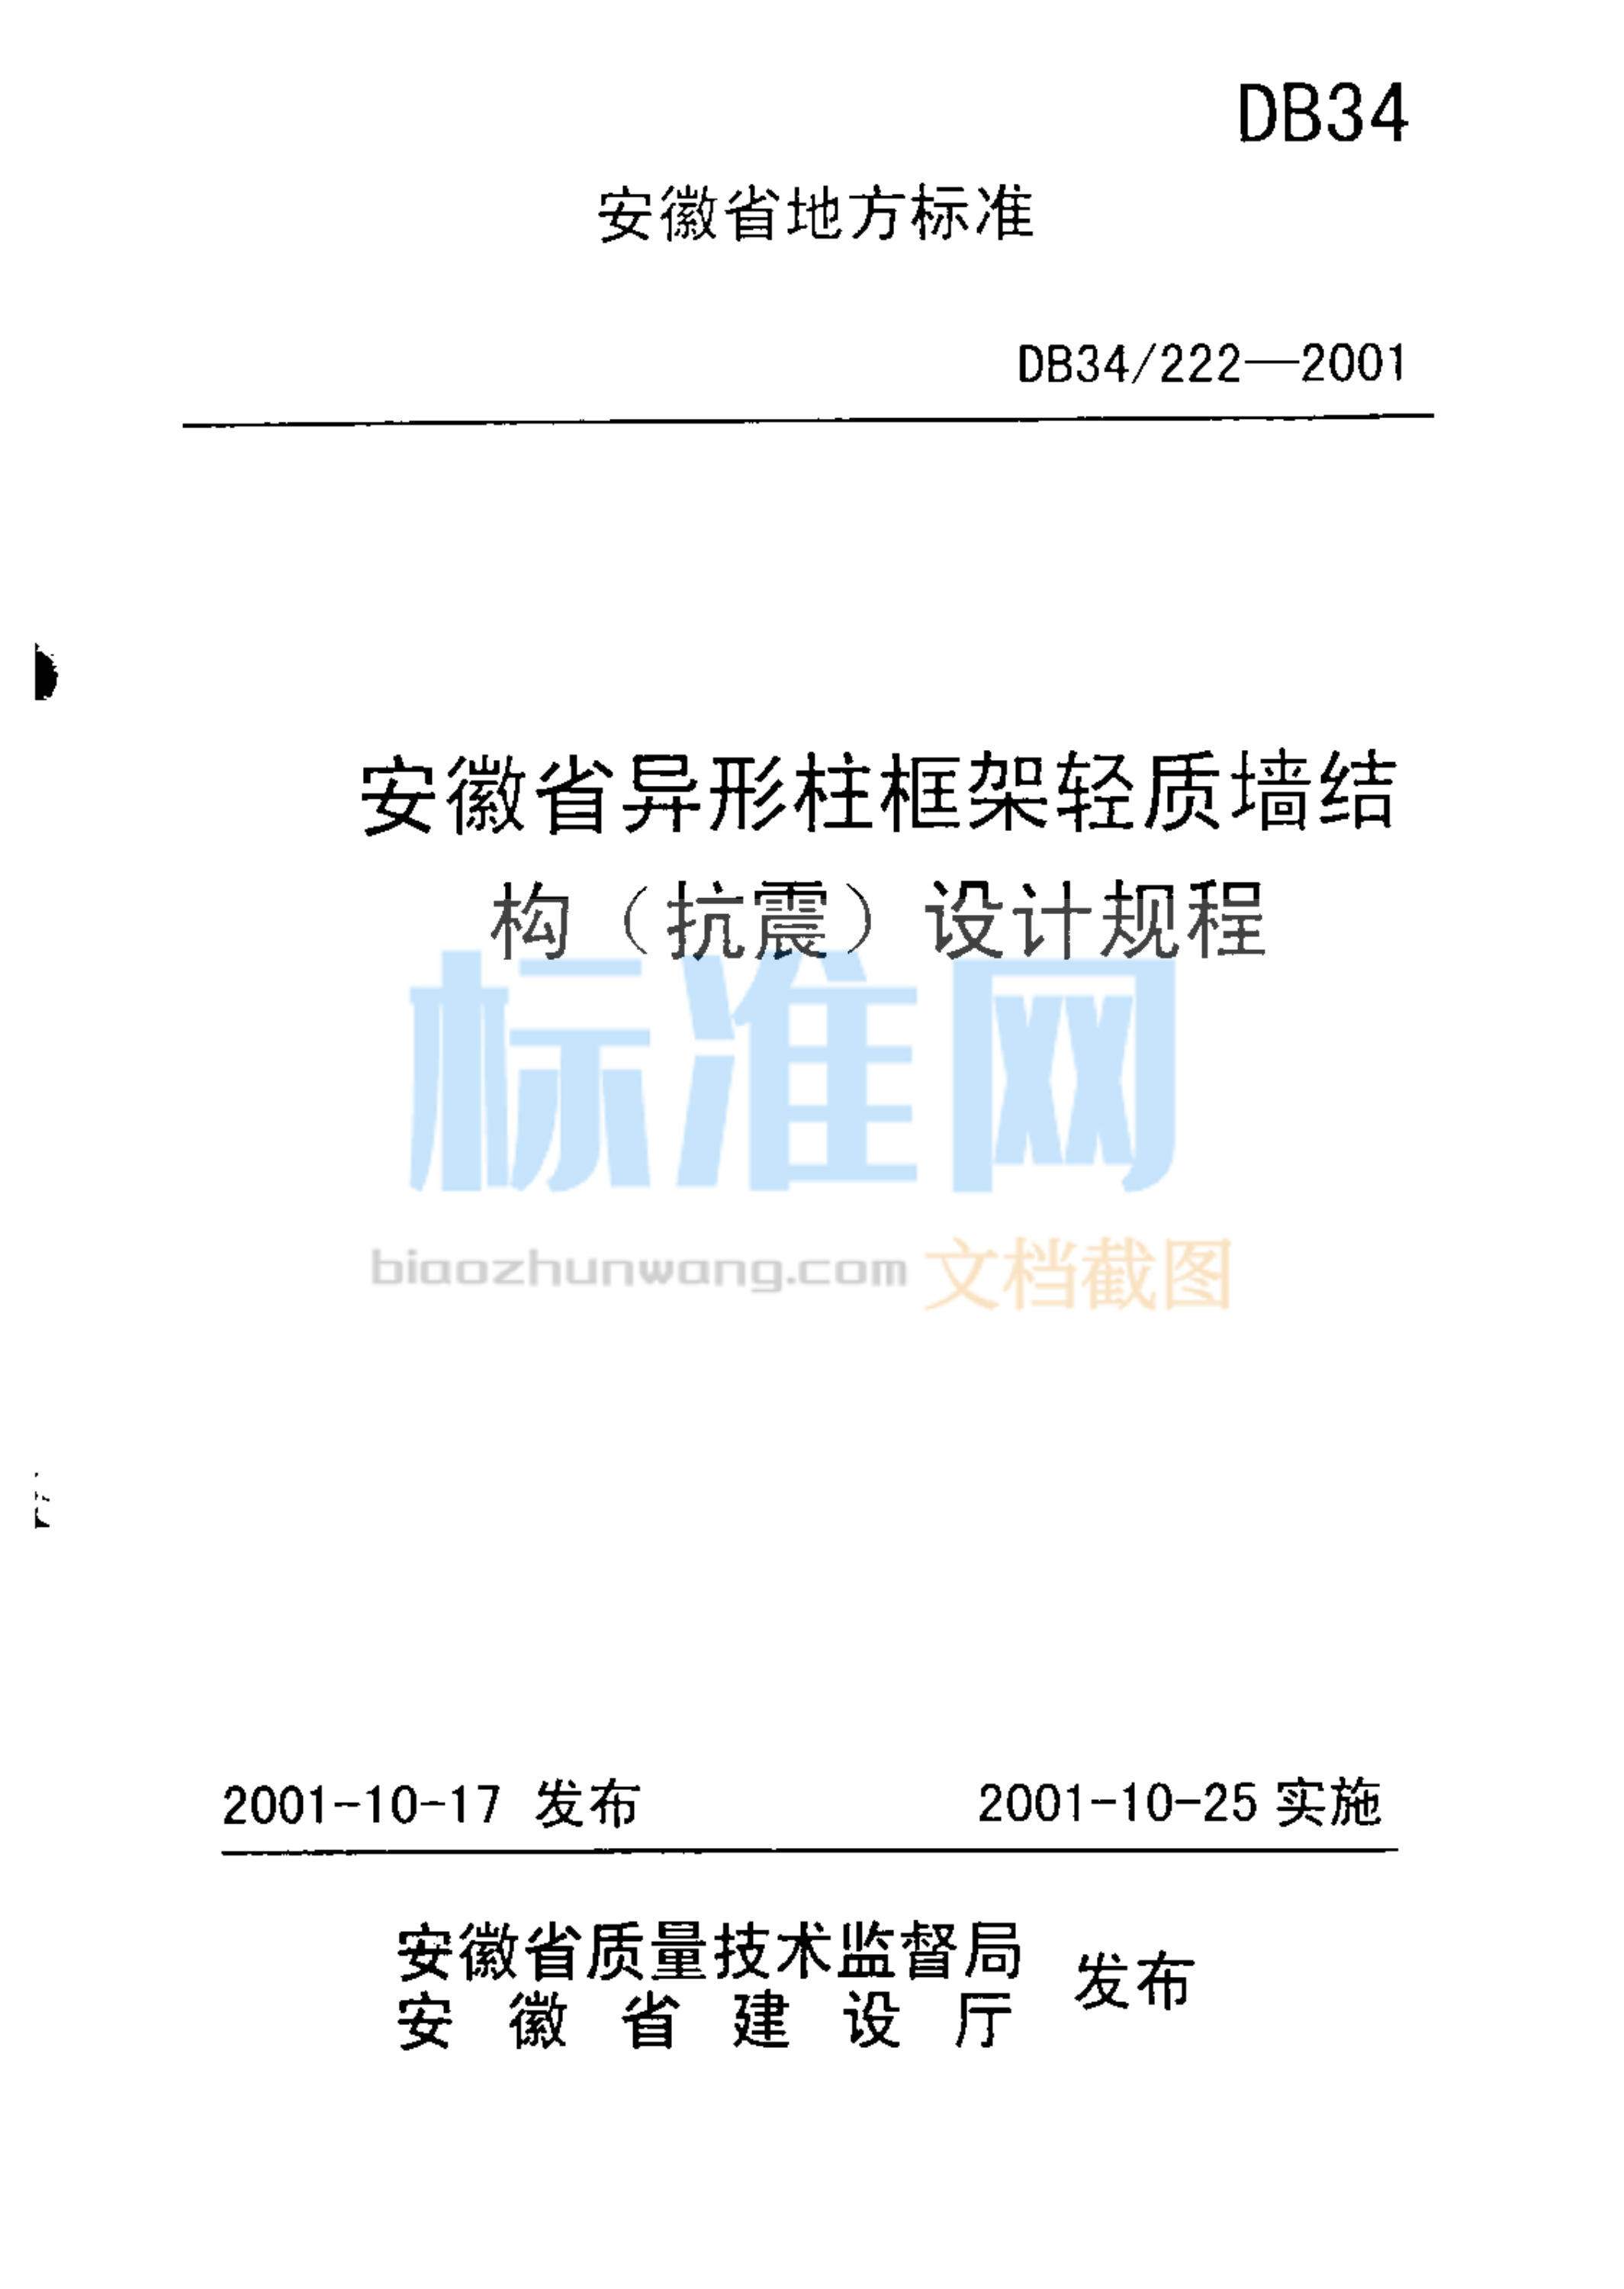 DB34/222-2001 安徽省异形柱框架轻质墙结构(抗震)设计规程